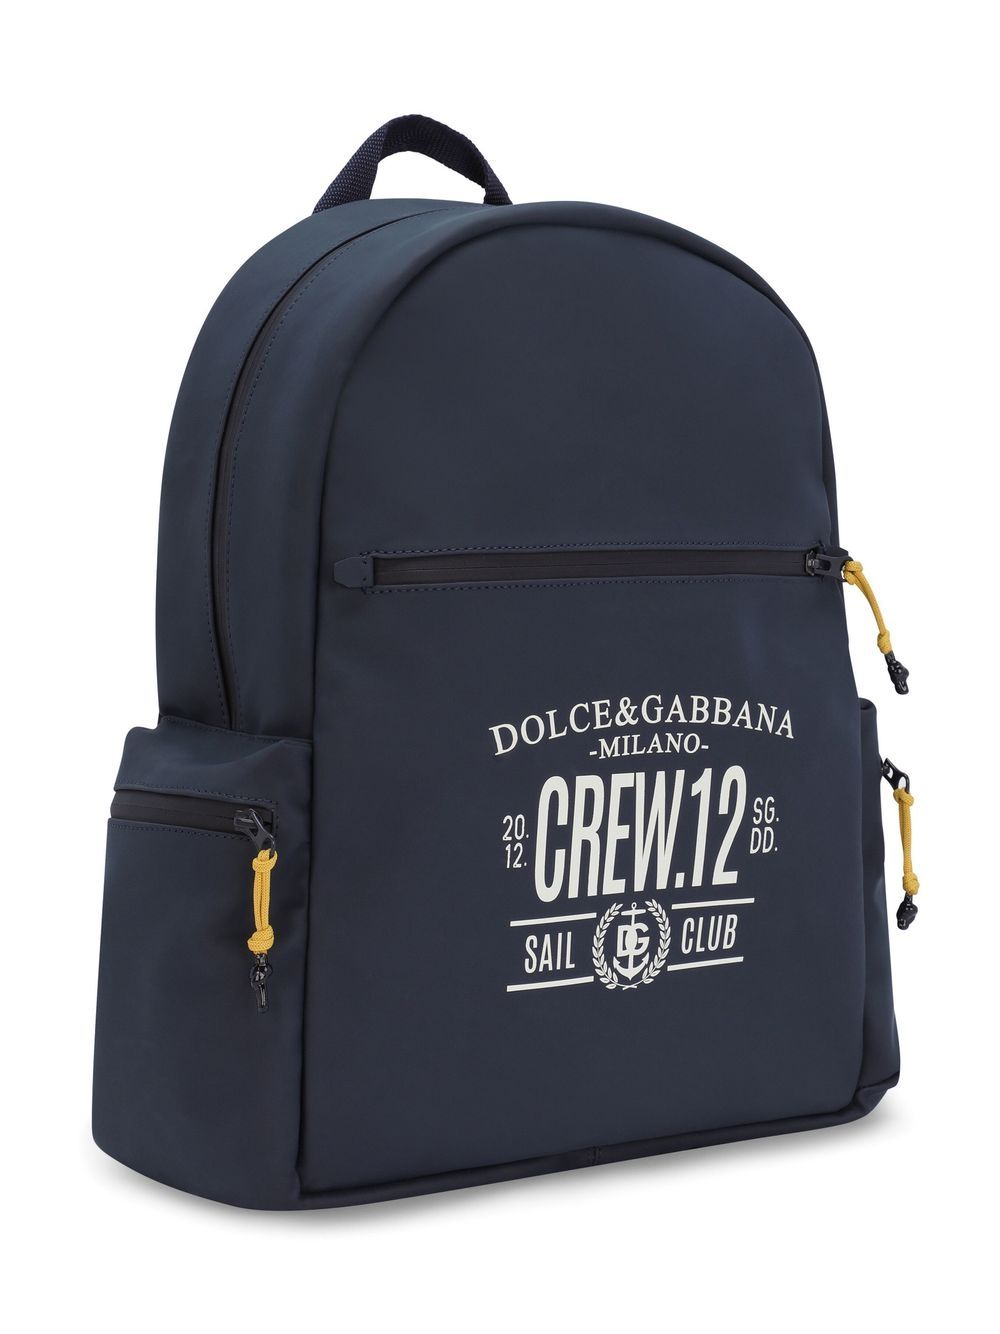 Dolce & Gabbana Kids Crew Sail Club rugzak - Blauw